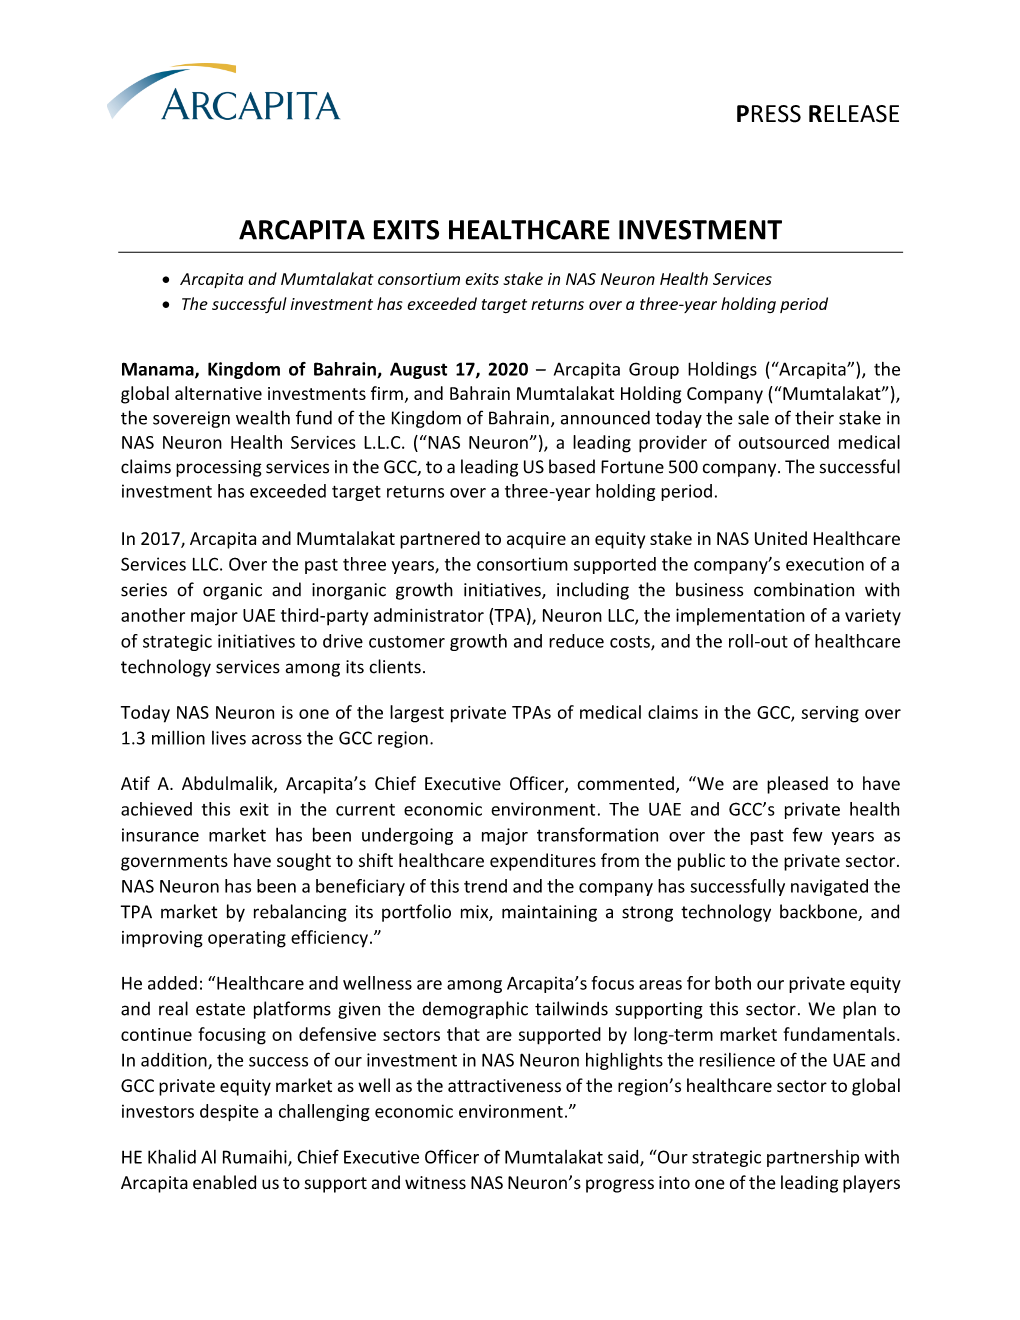 Arcapita Exits Healthcare Investment